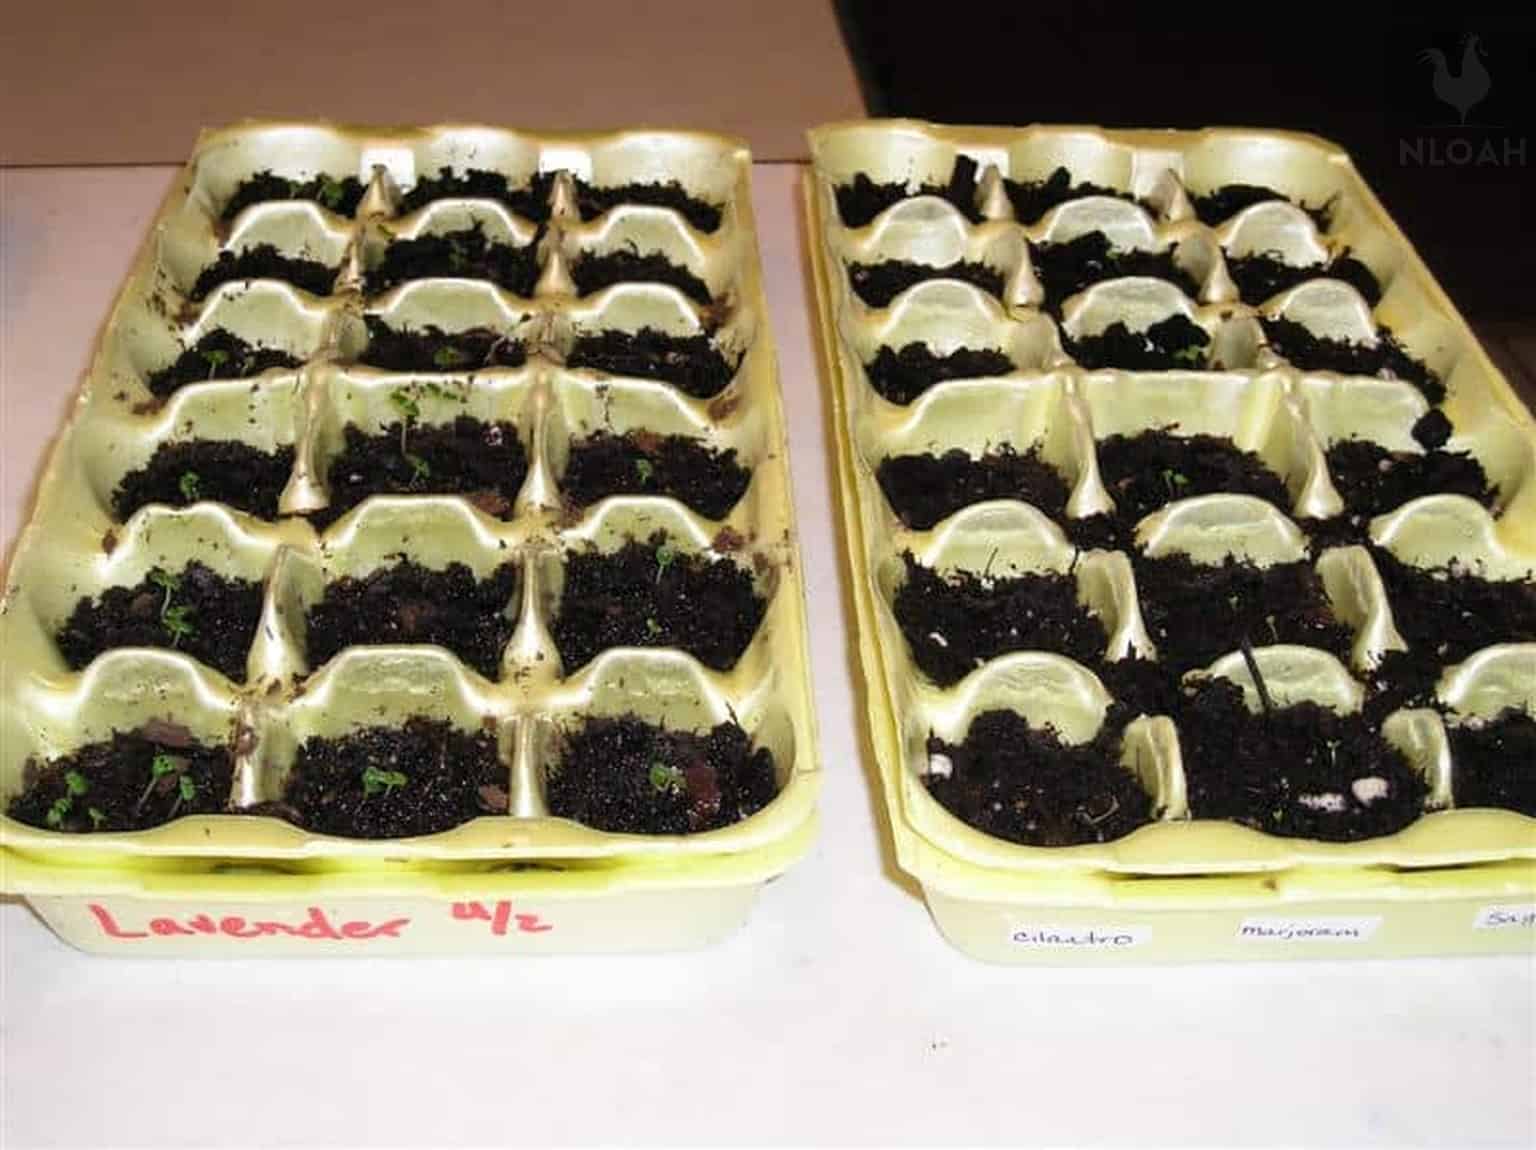 lavender cilantro marjoram and sage seedlings in egg cartons